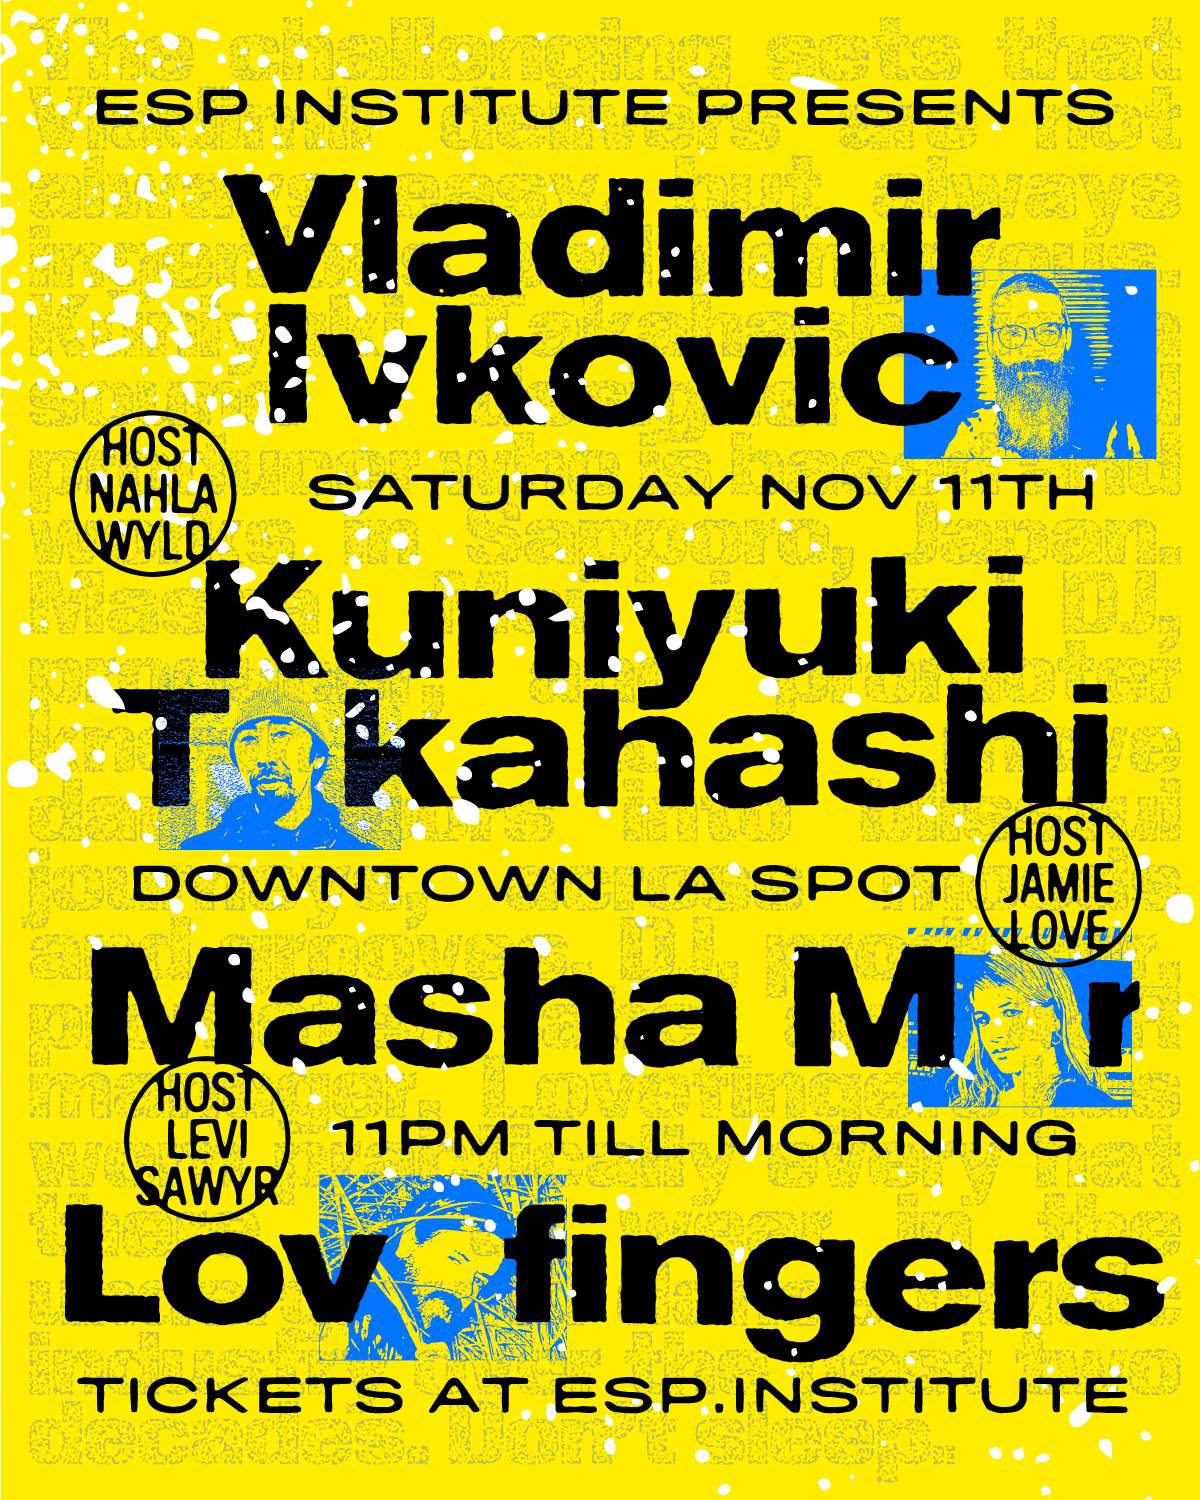 ESP Institute presents Vladimir Ivkovic, Kuniyuki (live), Masha Mar, Lovefingers - フライヤー表